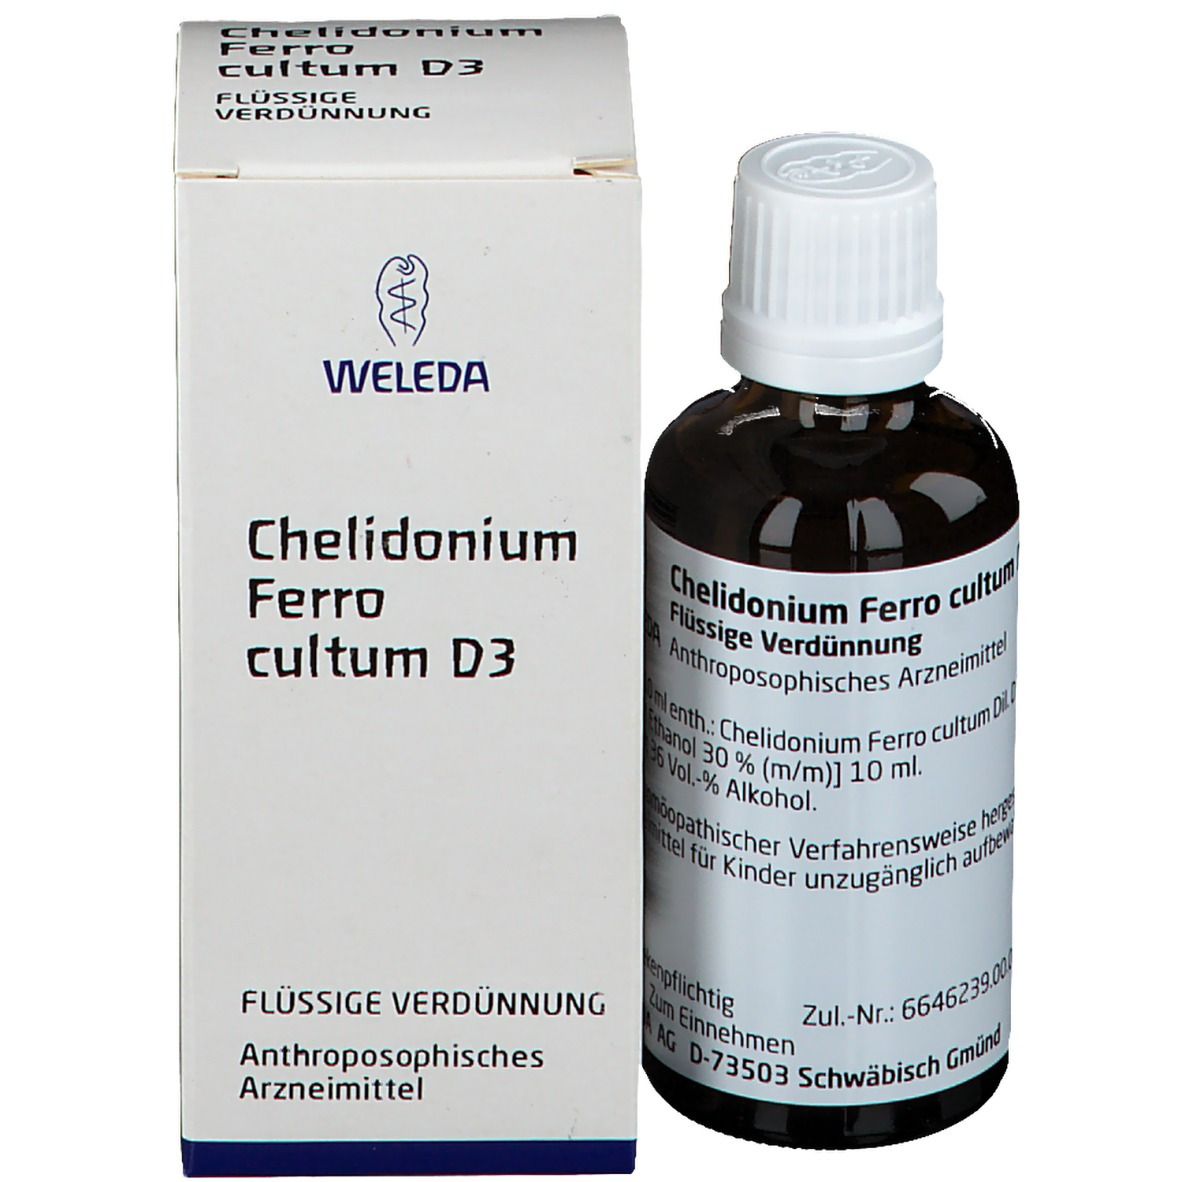 Chelidonium Ferro Cultum D3